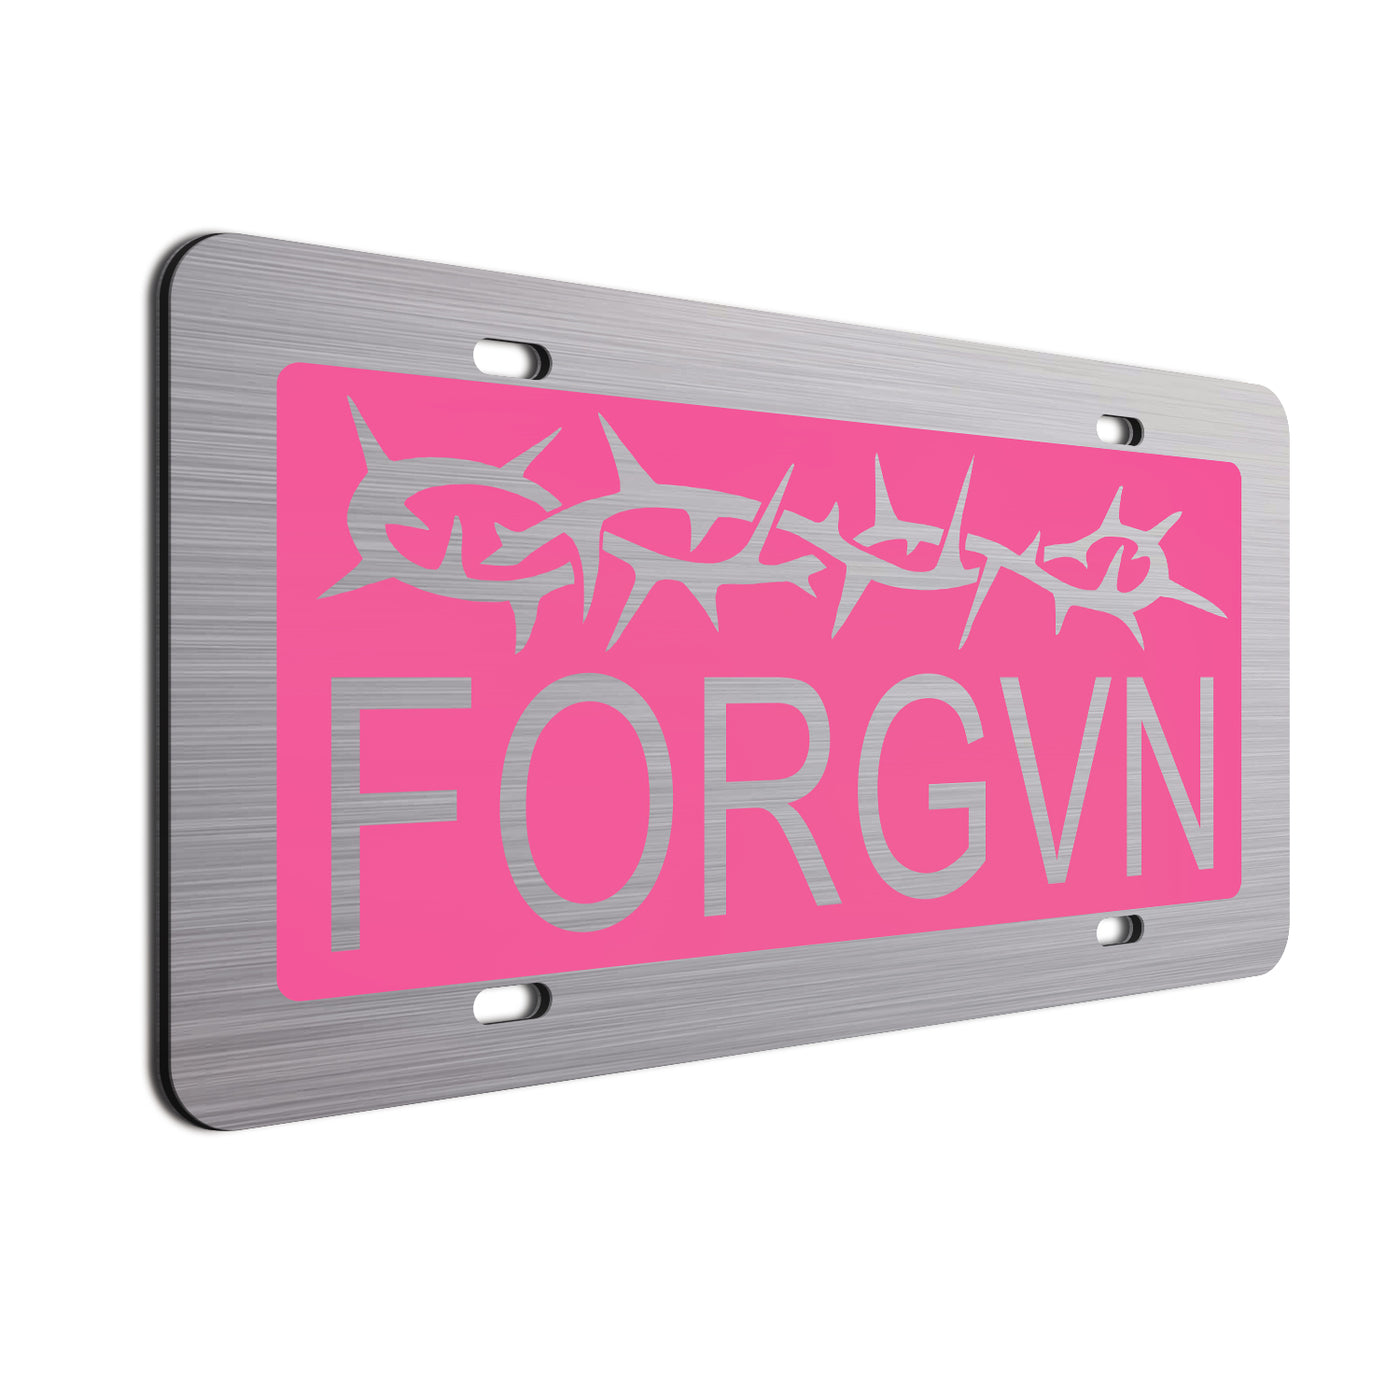 Forgiven Car Tag Pink